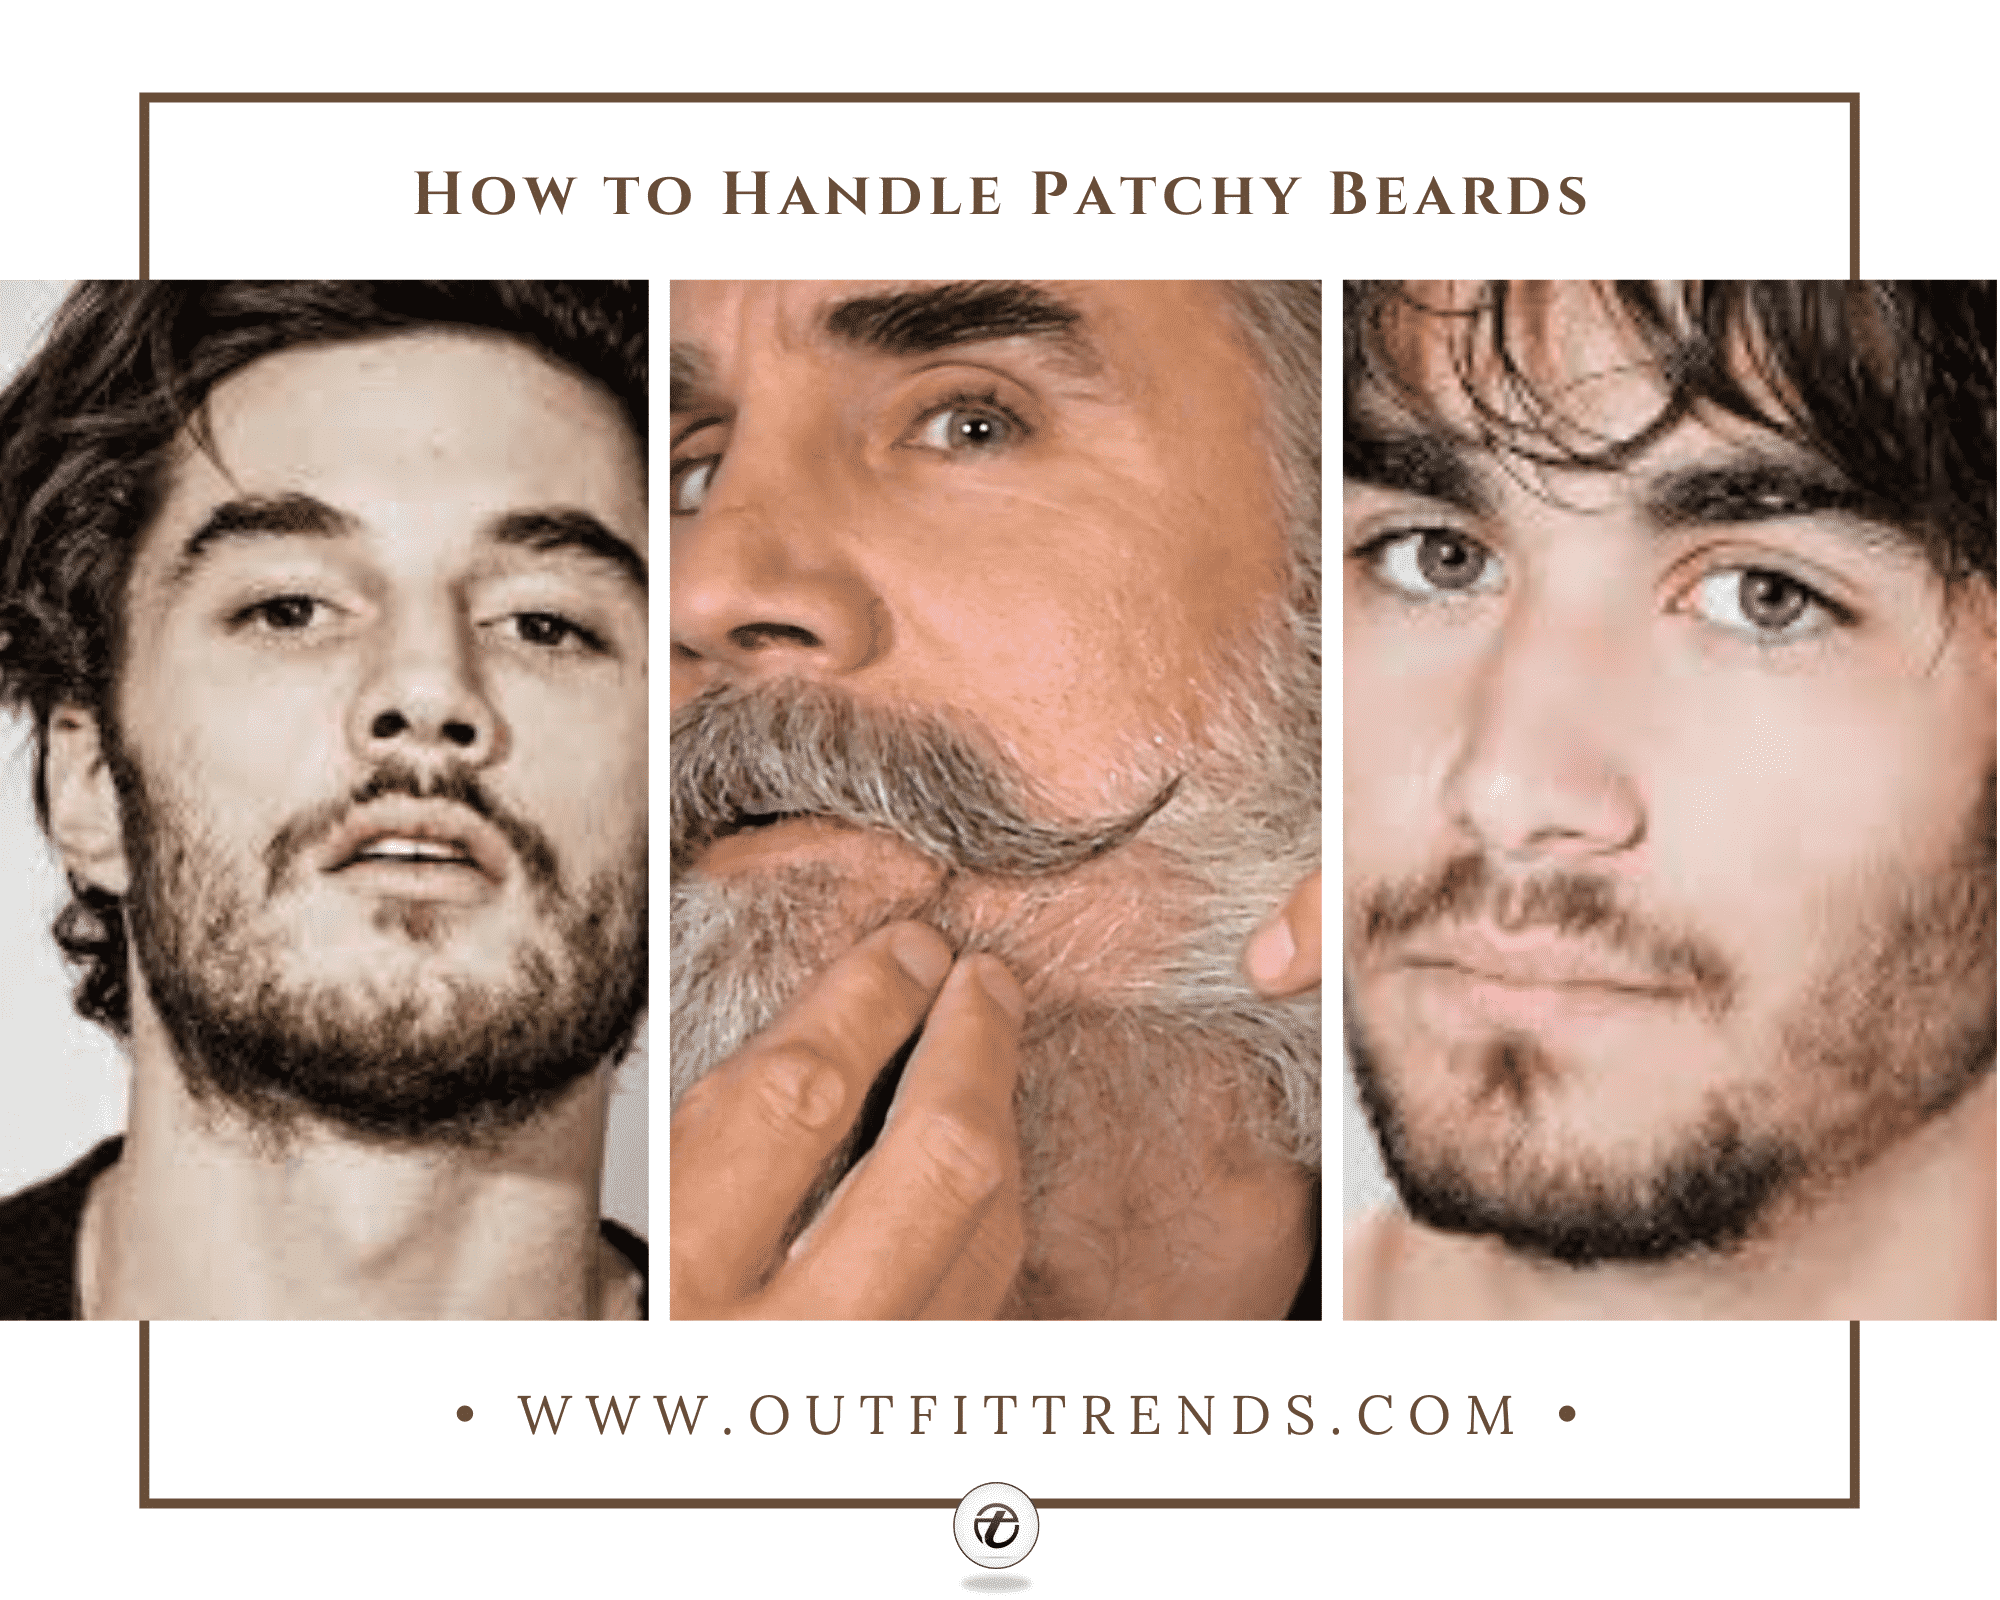 patchy beard styles